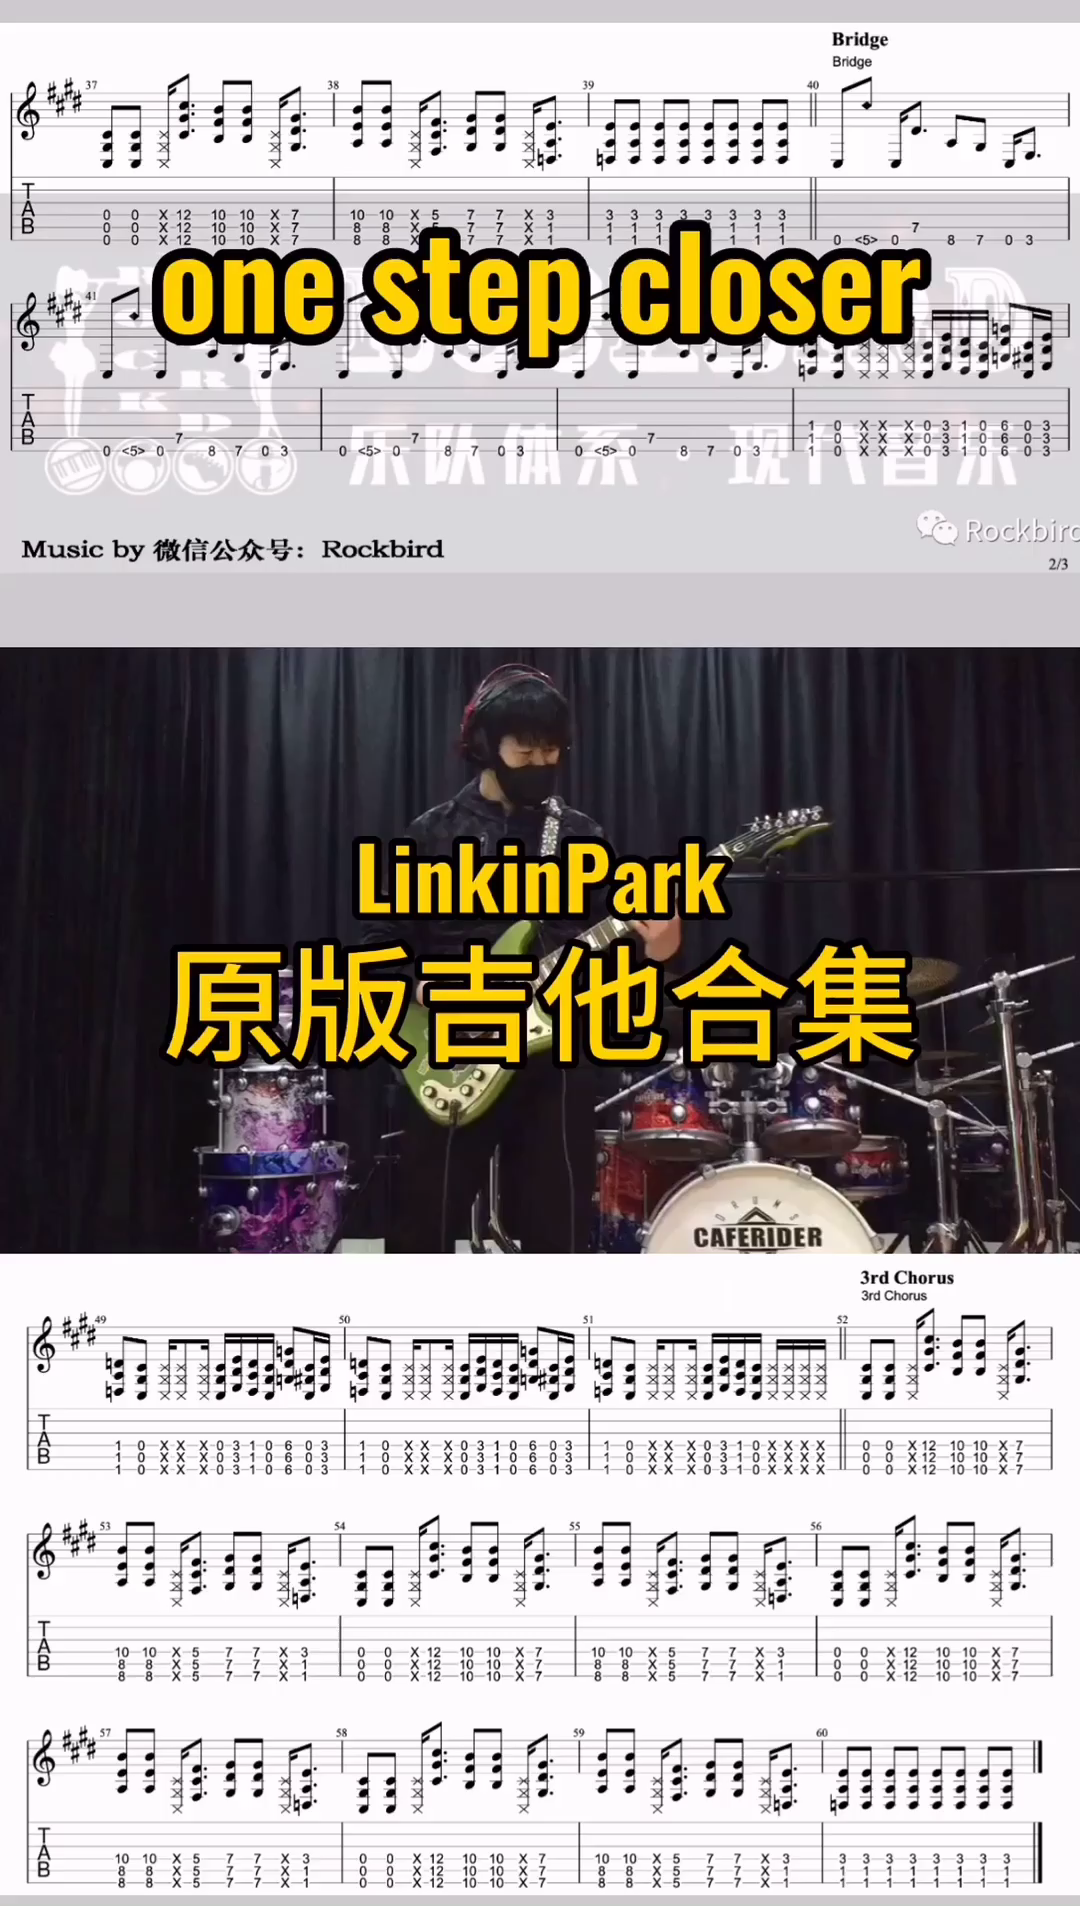 Numb吉他谱(gtp谱,木吉他,扫弦)_Linkin Park(林肯公园)